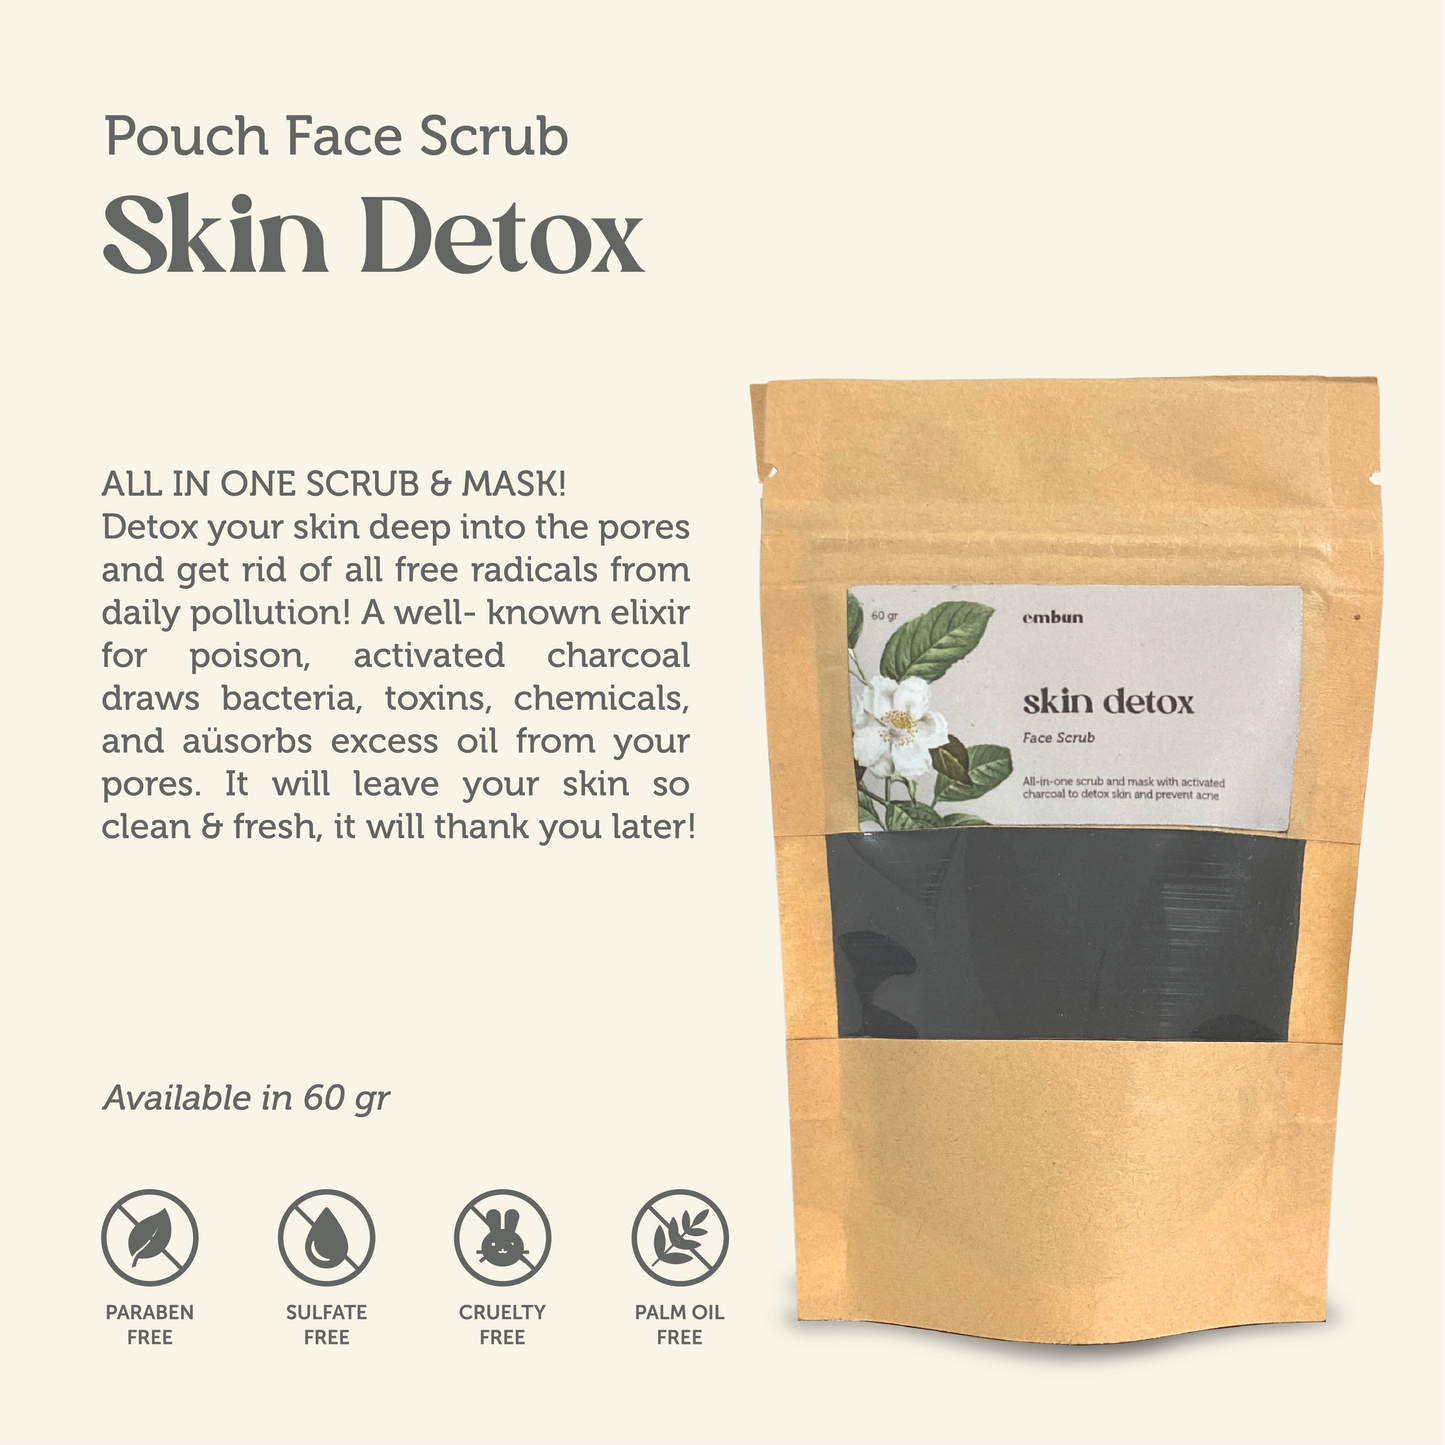 Pouch Face Scrub Skin Detox 60 gr